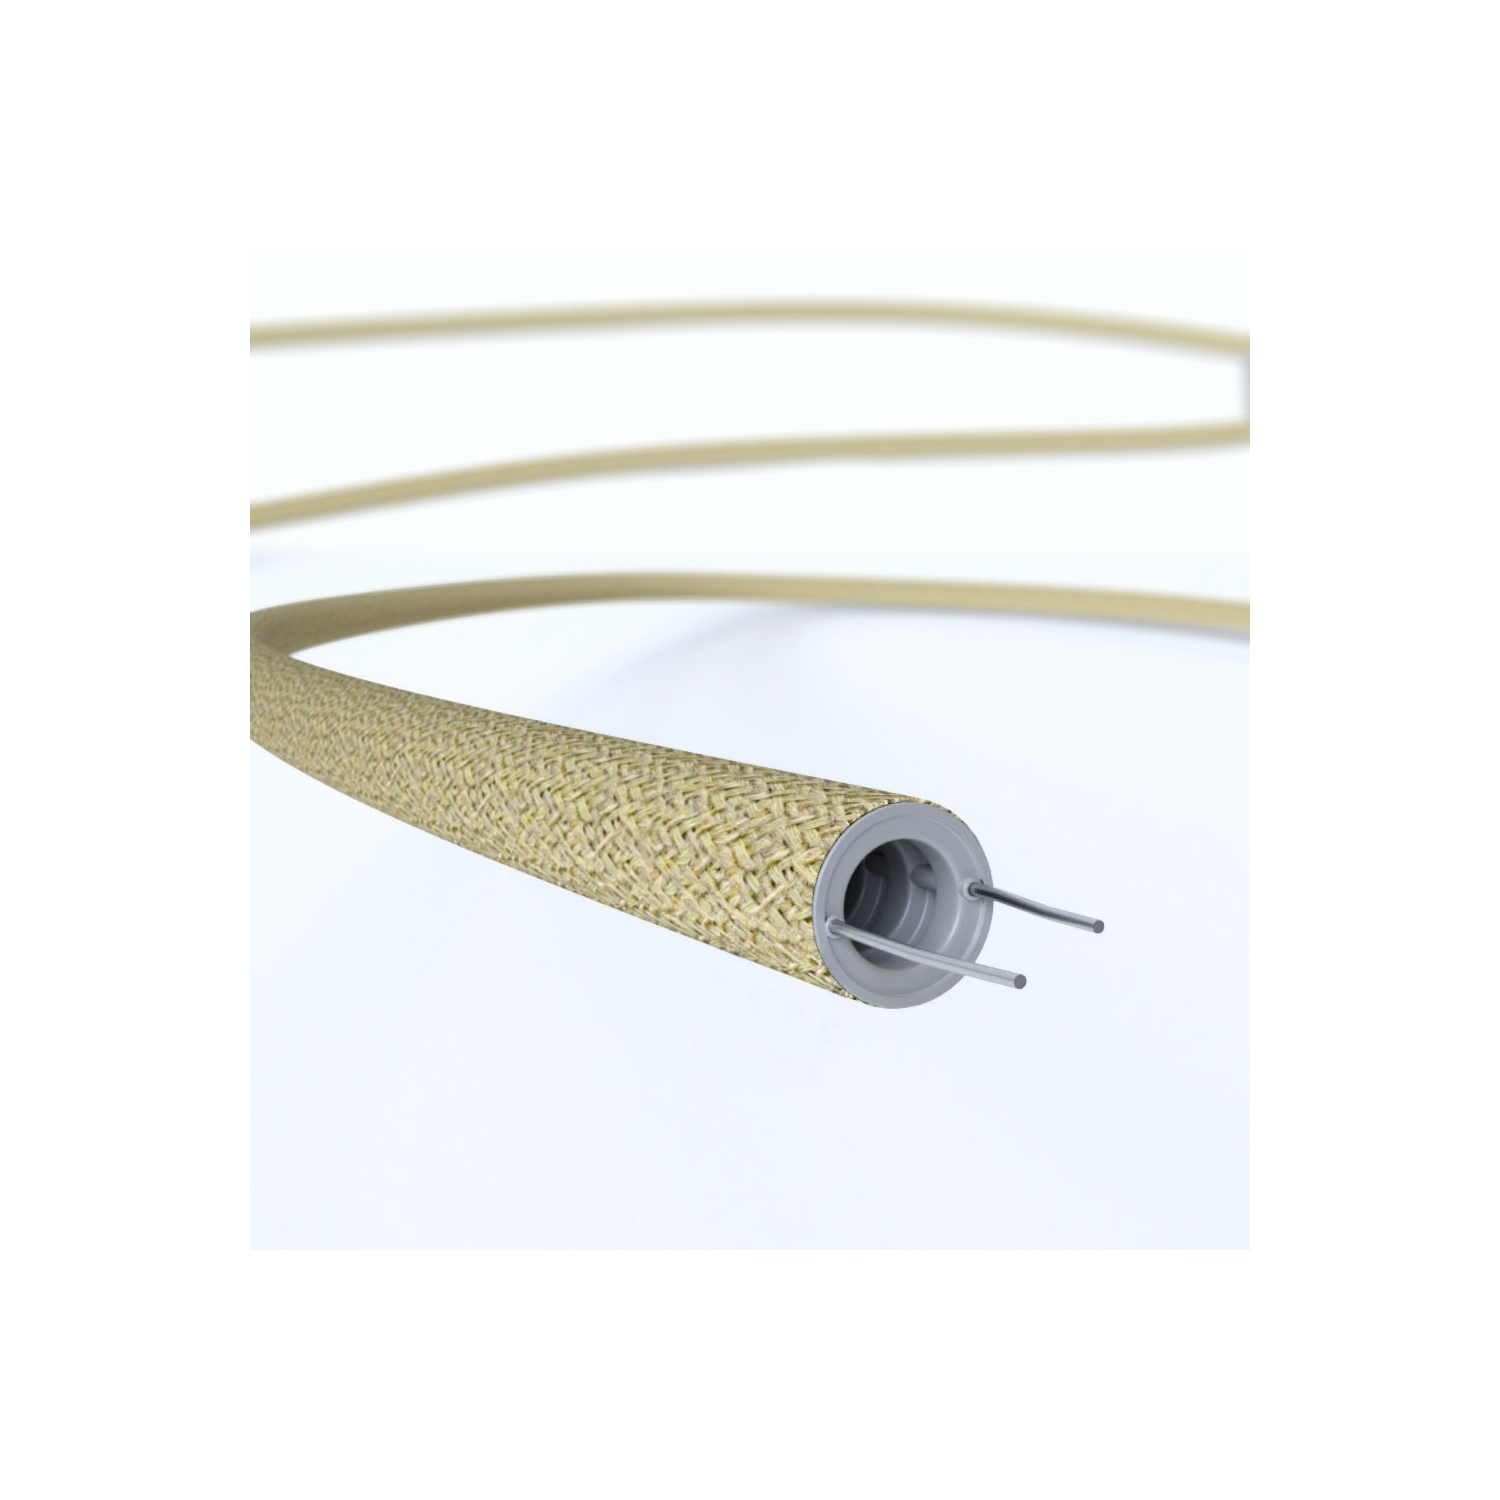 Creative-Tube flexible conduit, Jute RN06 fabric covering, diameter 16 mm